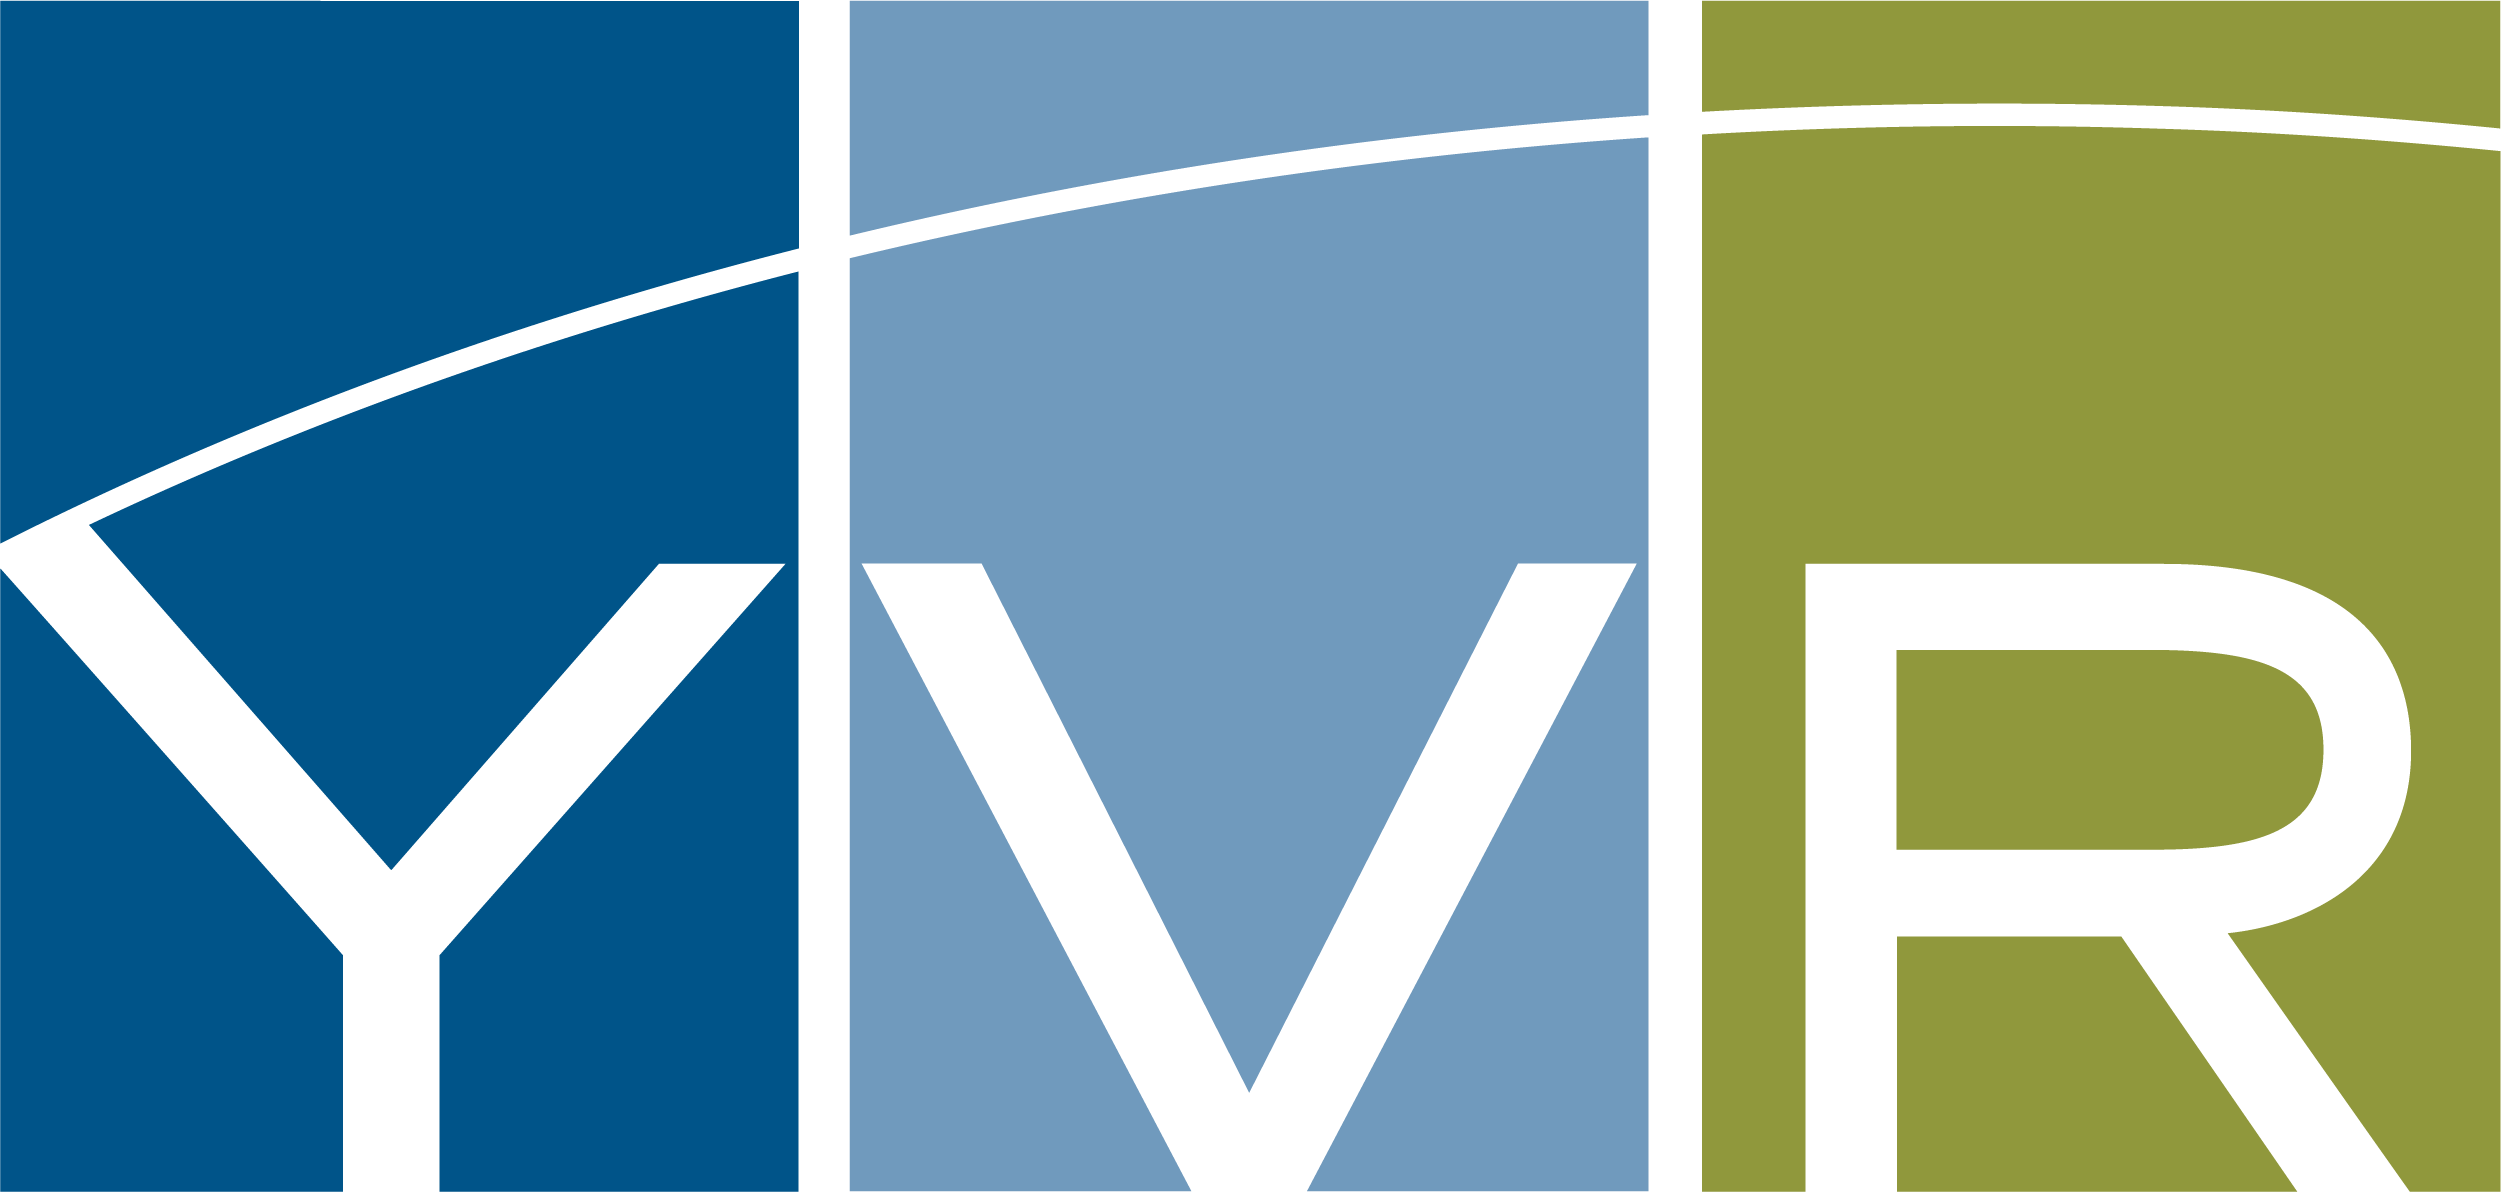 https://www.ccprk.com/wp-content/uploads/2021/12/vancouver-international-airport-yvr-logo-vector.png